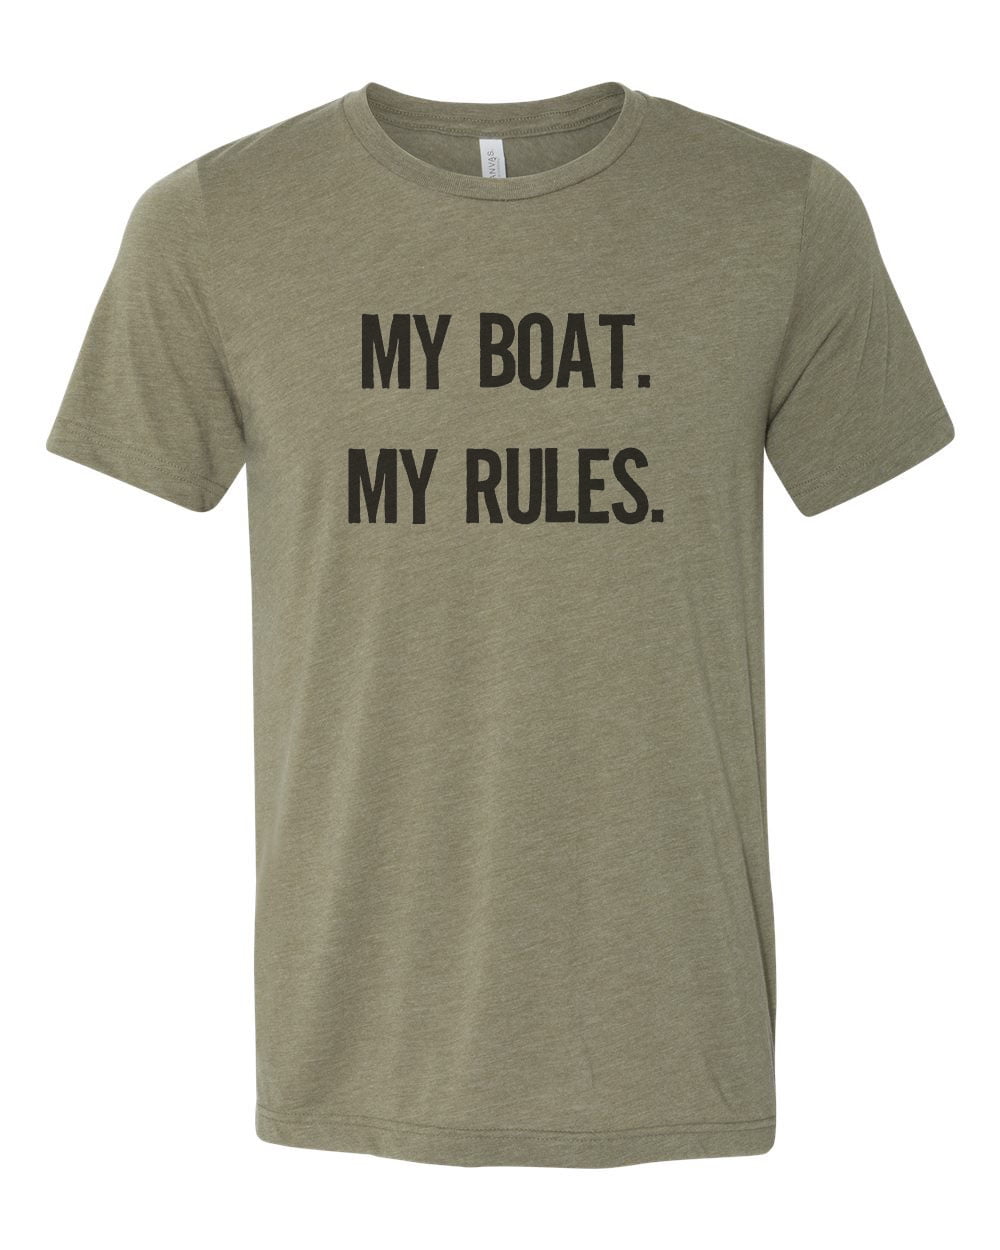 Boat Shirt, My Boat My Rules, Fishing Apparel, Fishing Tshirt, Sublimation T,  Fisherman Shirt, Dad Shirt, Hunting And Fishing, Captain Shirt, White,  LARGE 